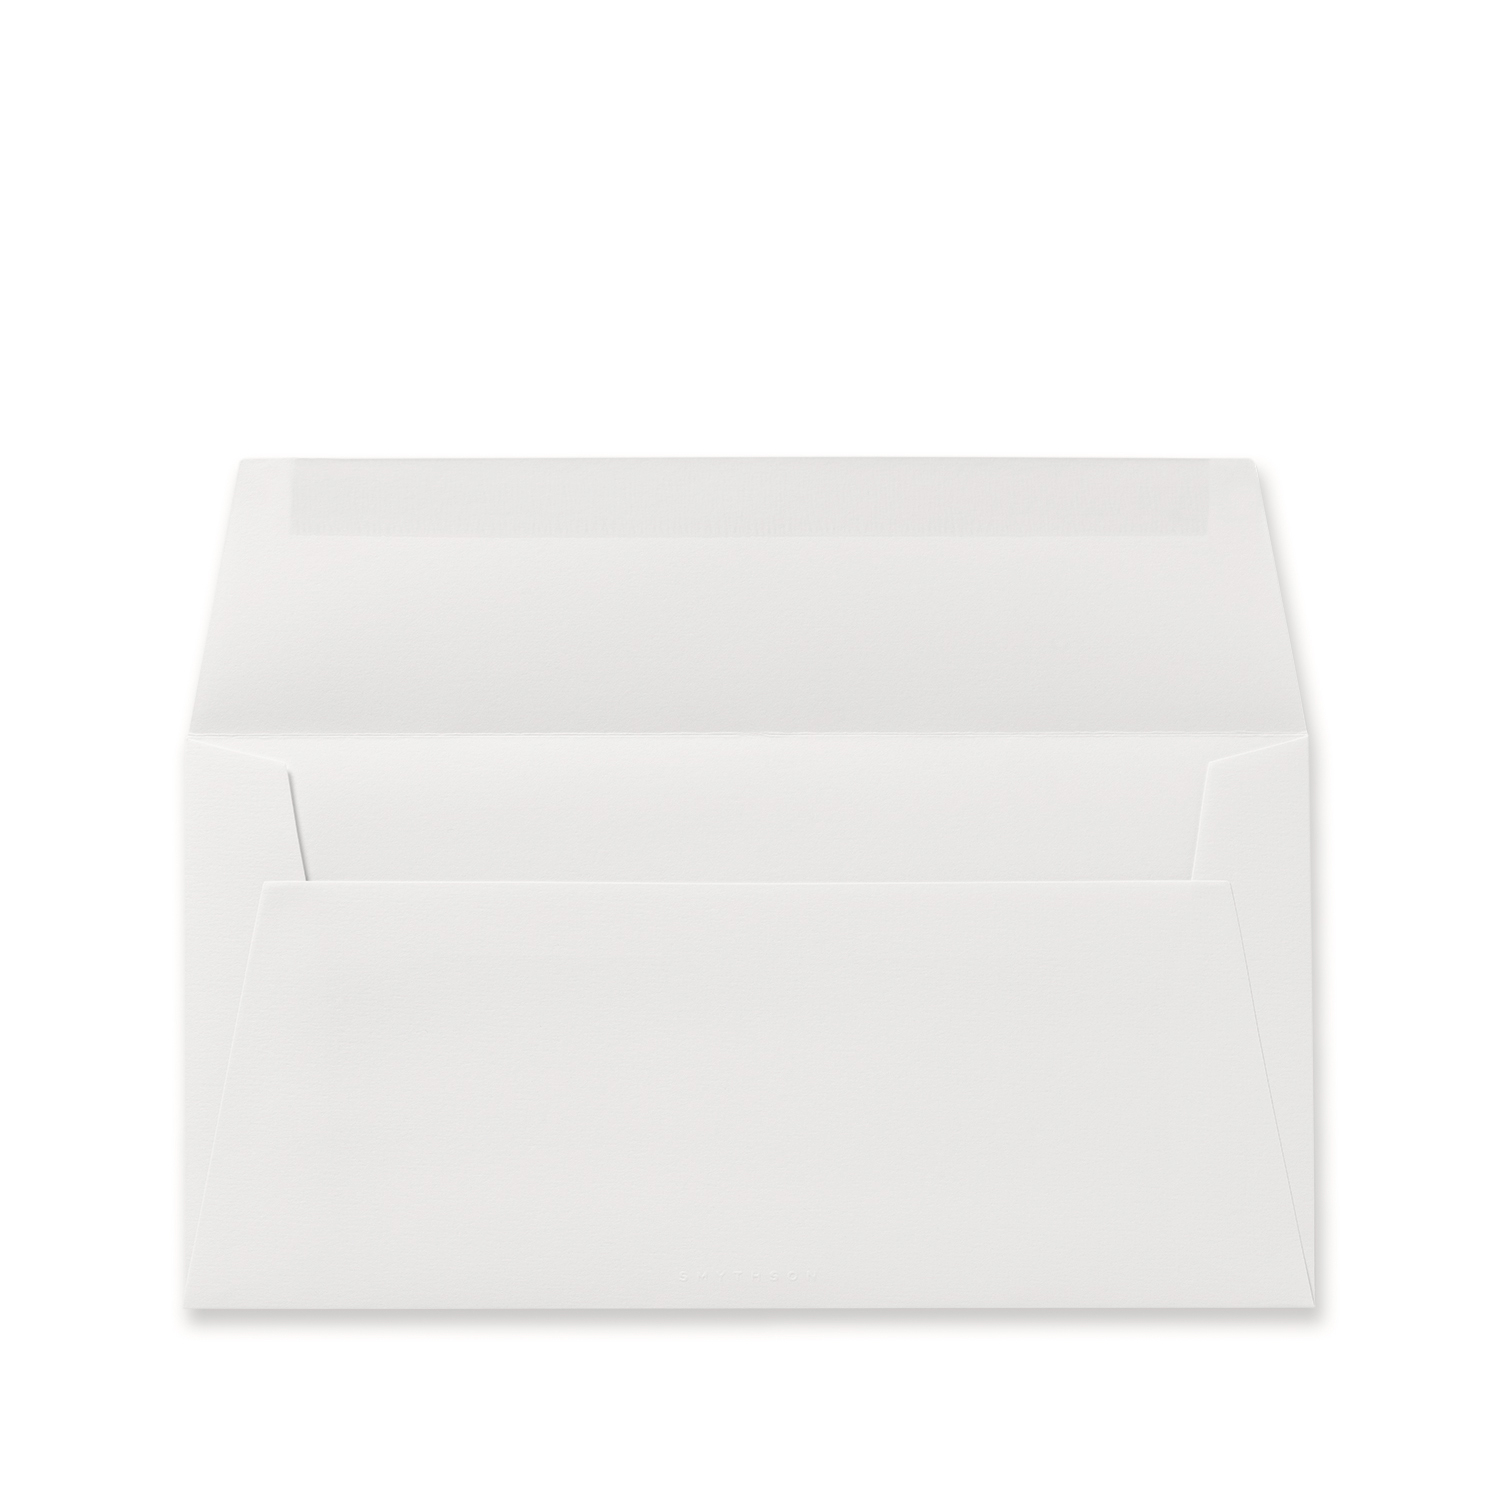 Smythson A4 Envelopes  white wove